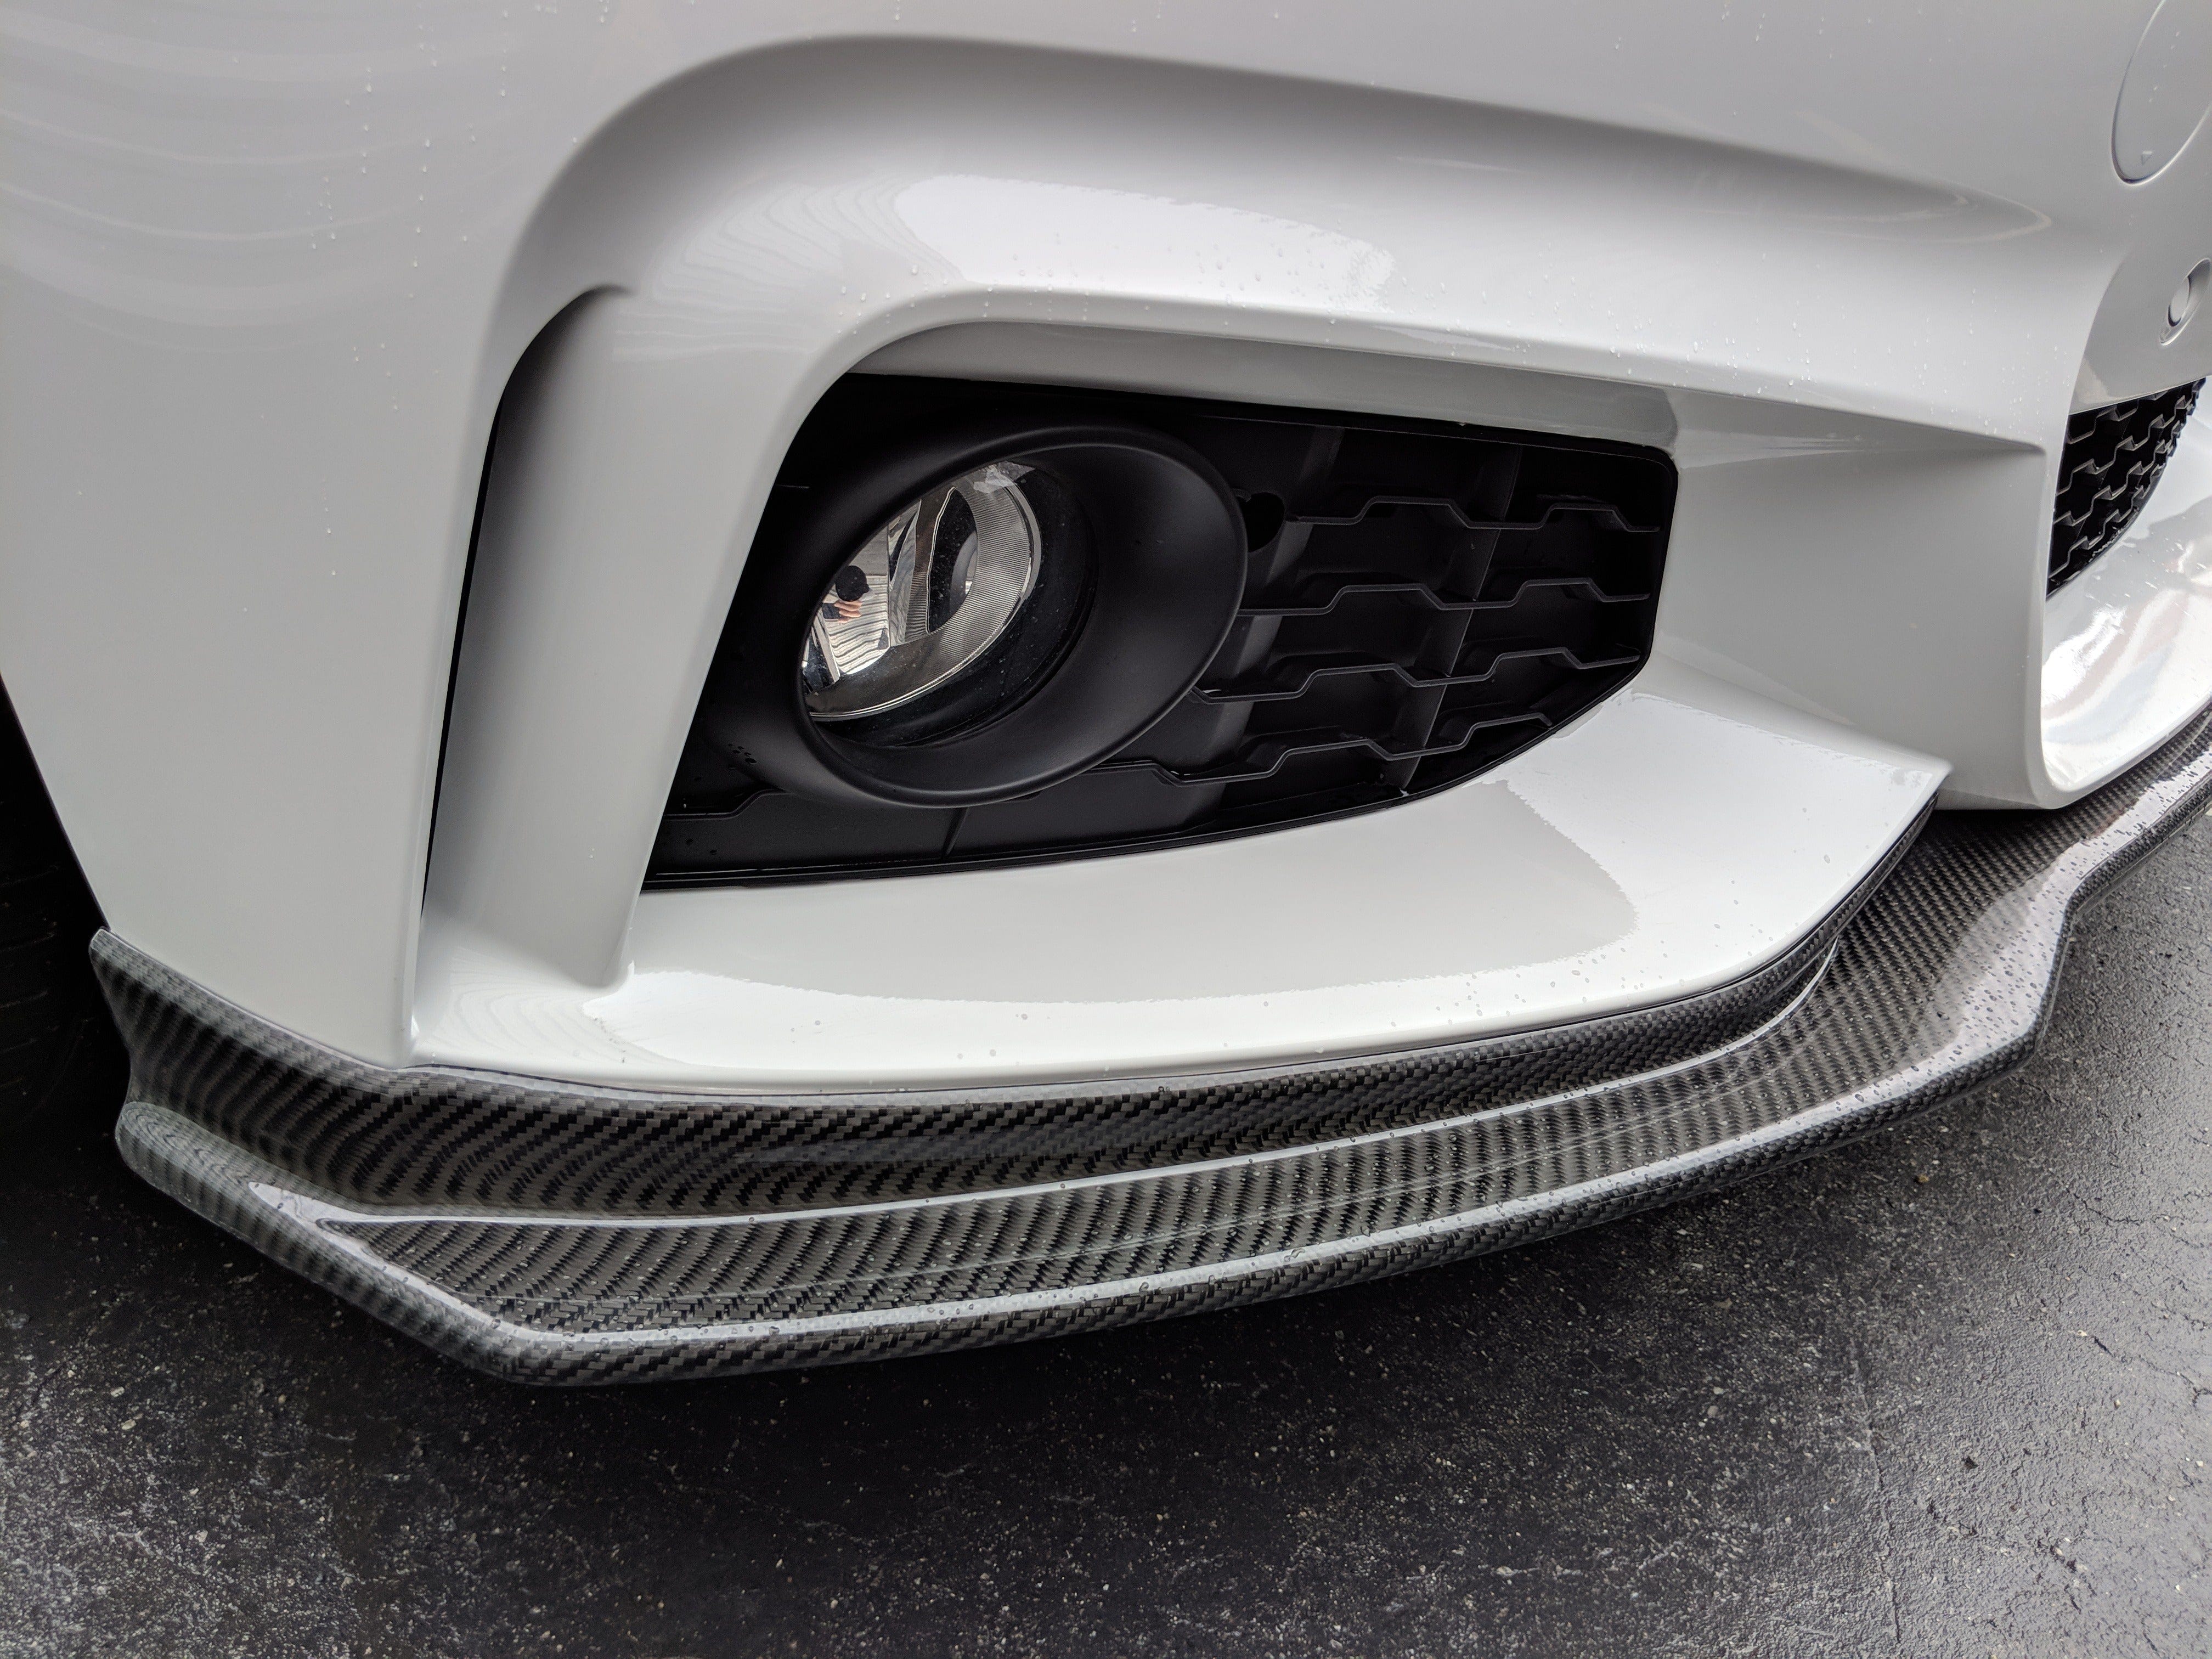 Kies-Motorsports Overstock 2014-2020 BMW 4 Series (F32 / F33 / F36) End.CC Style Carbon Fiber Front Lip